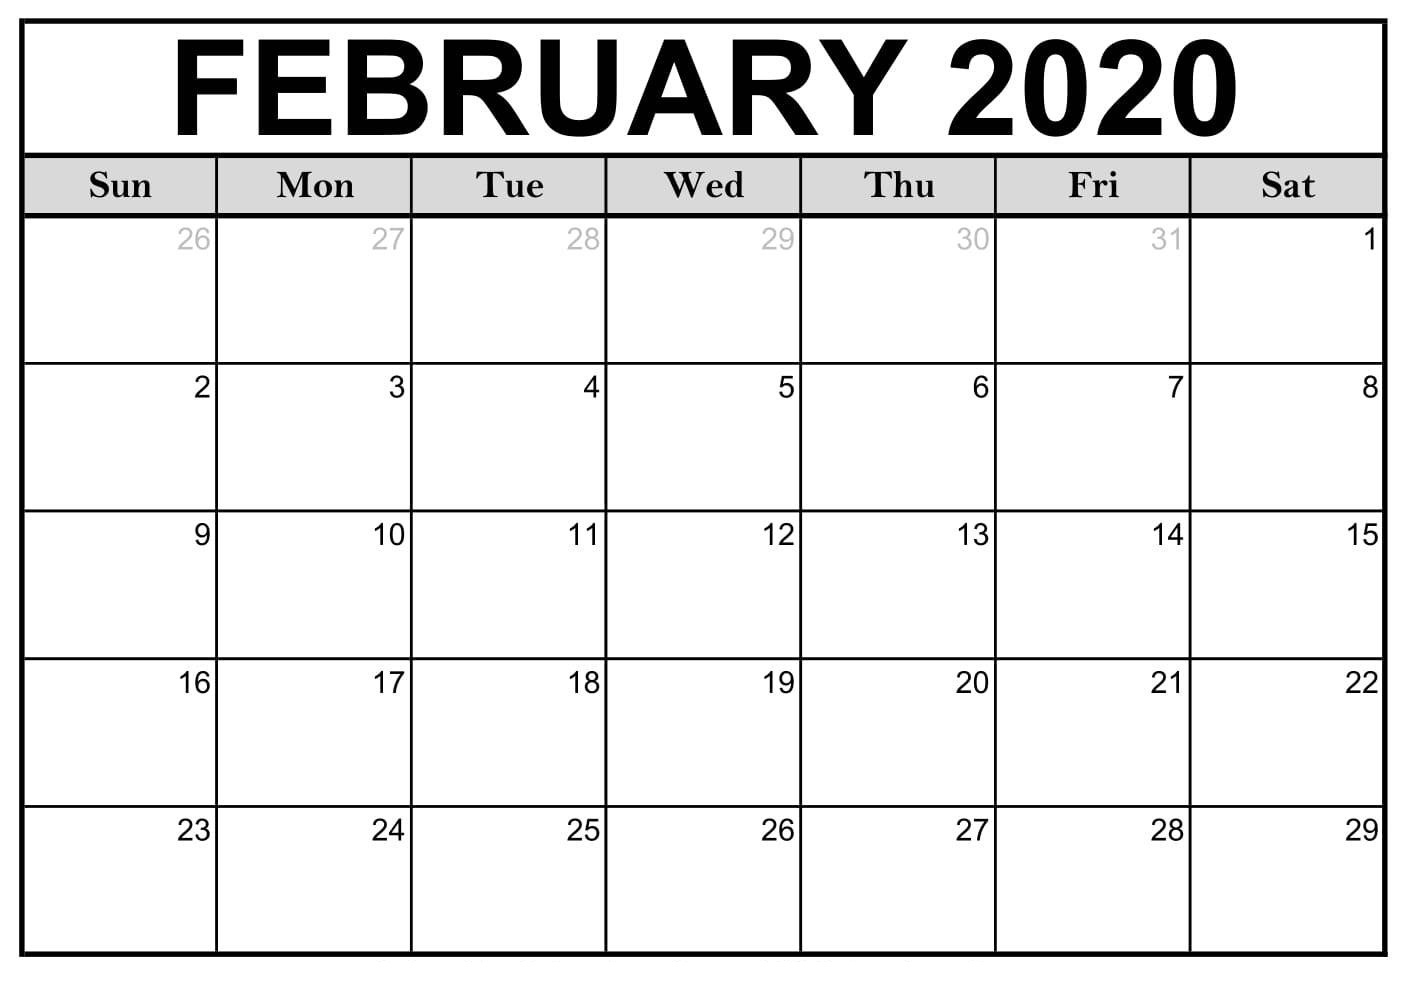 February 2020 Calendar Canada Bank Holidays - 2019 Calendars Incredible February 2020 Calendar Canada